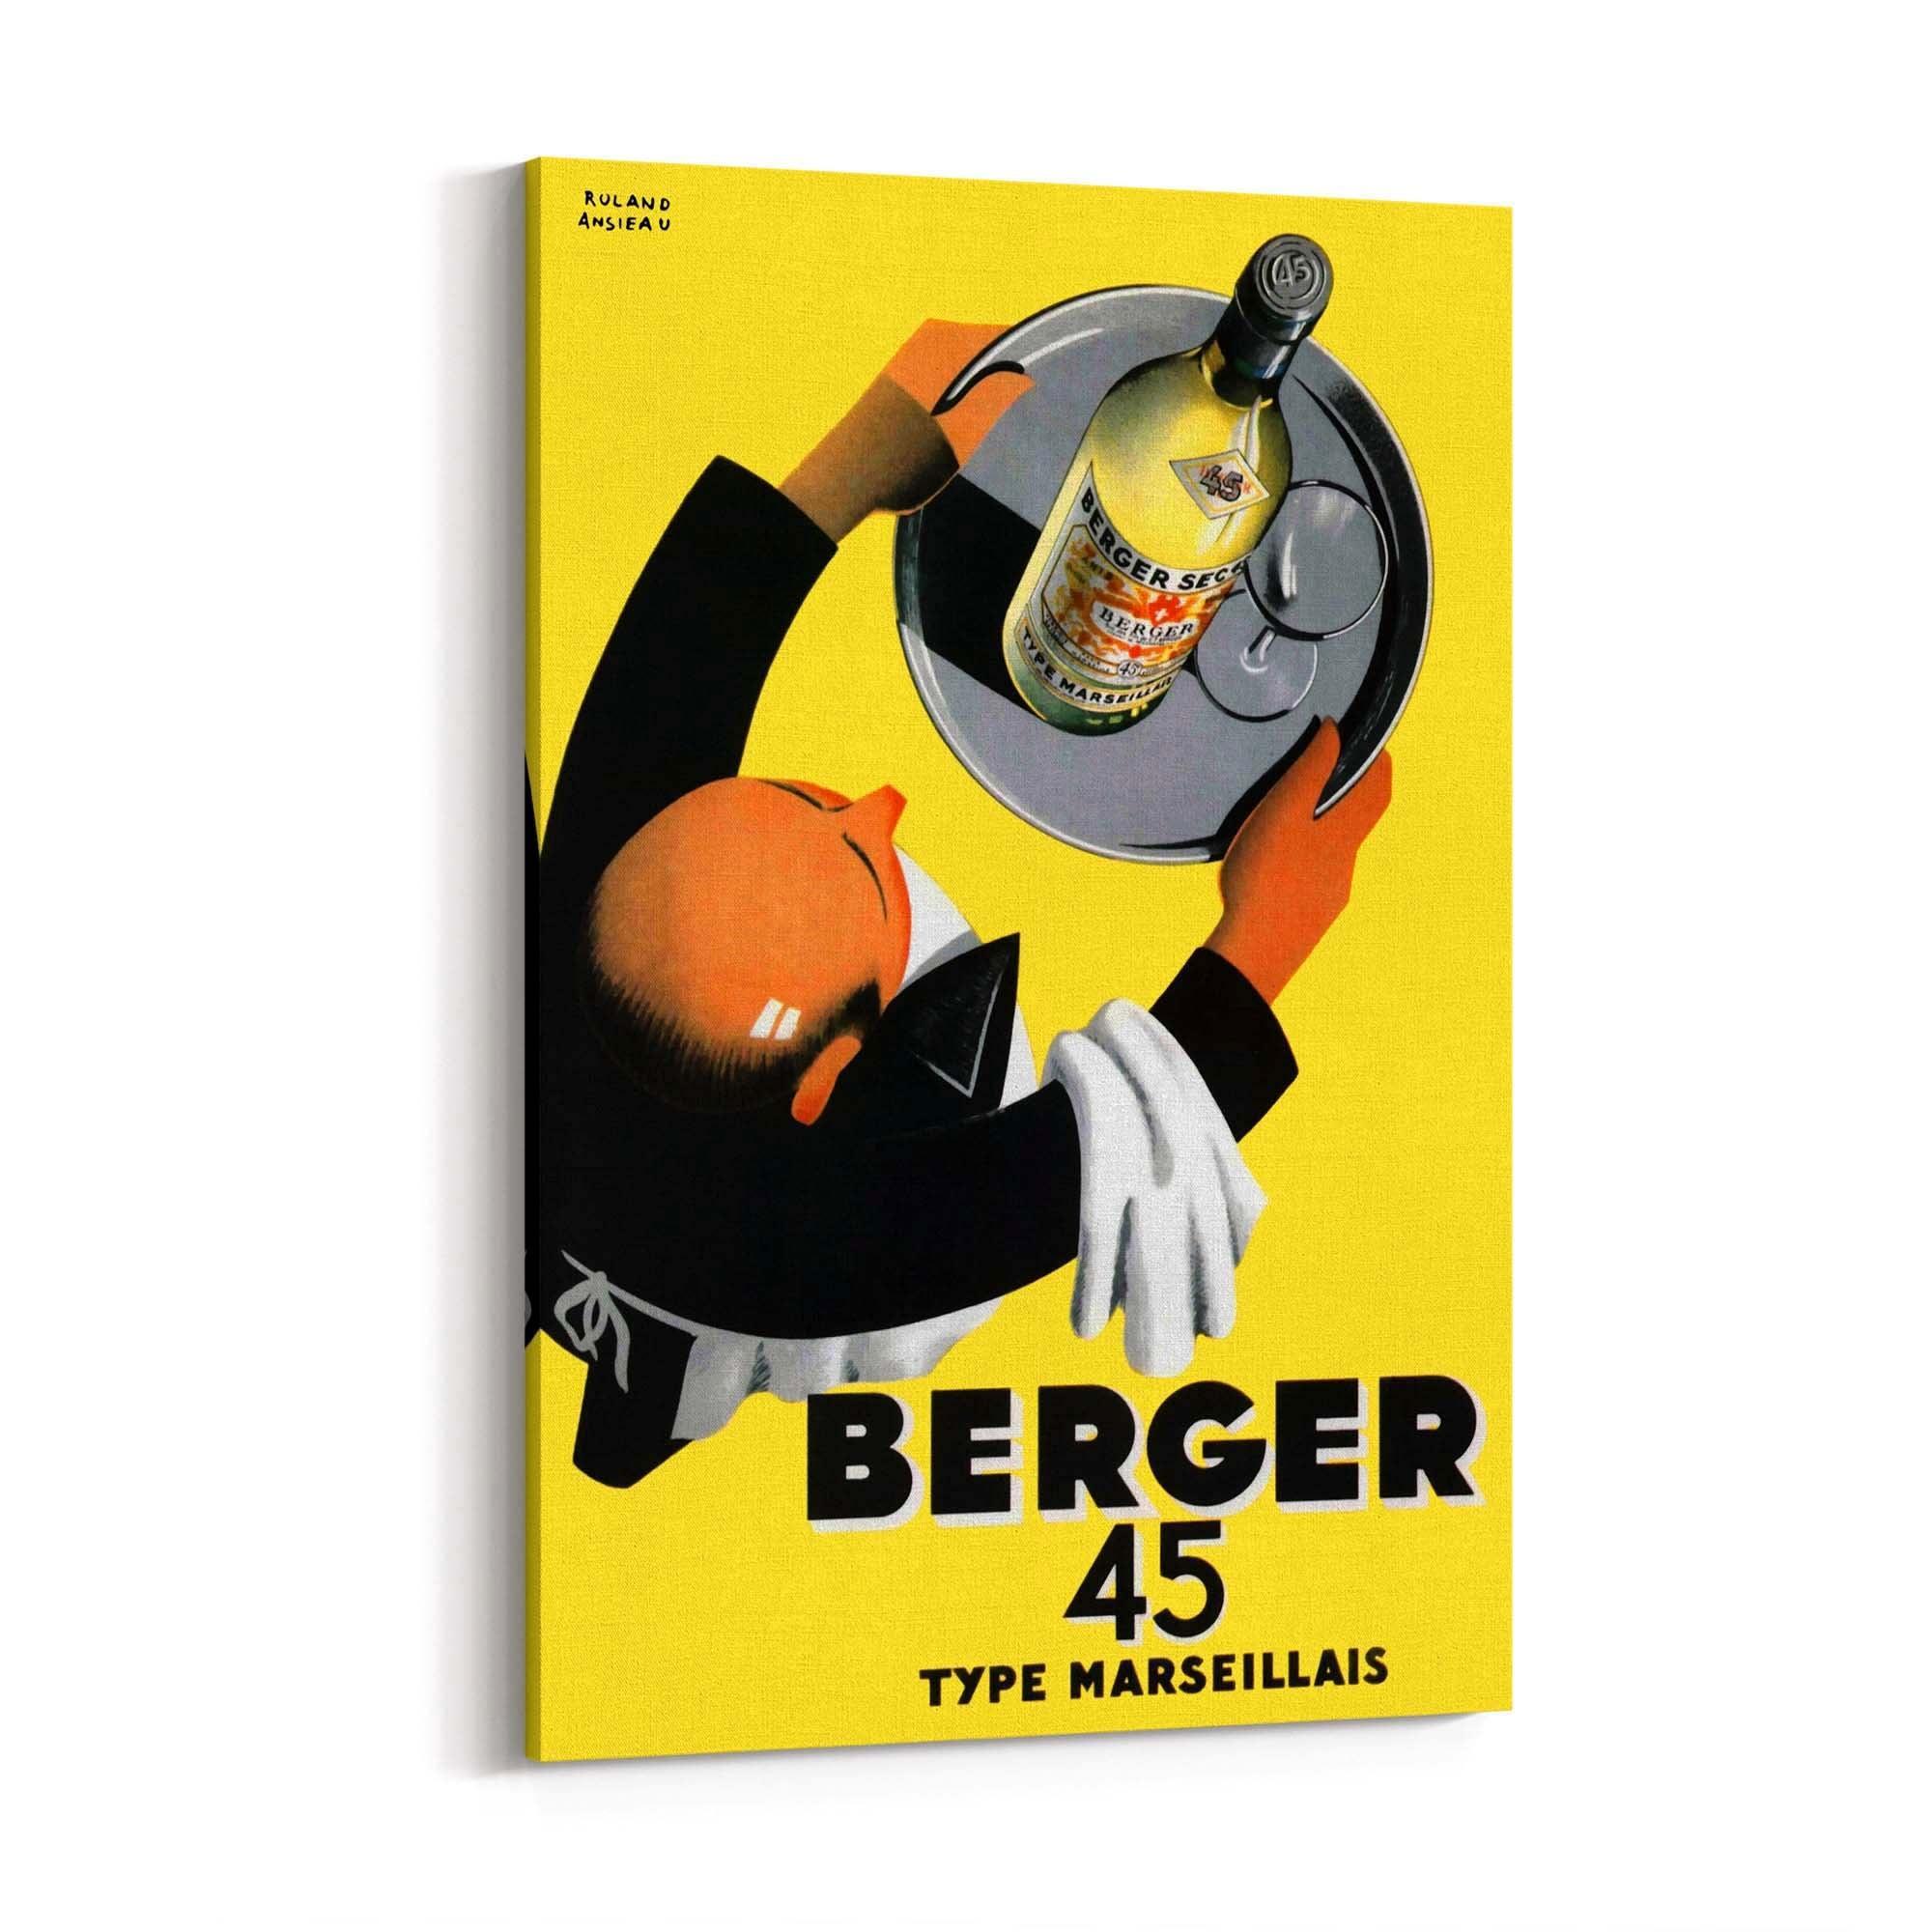 Berger 45 Vintage Advert Wall Art: Poster Print, Canvas or Framed